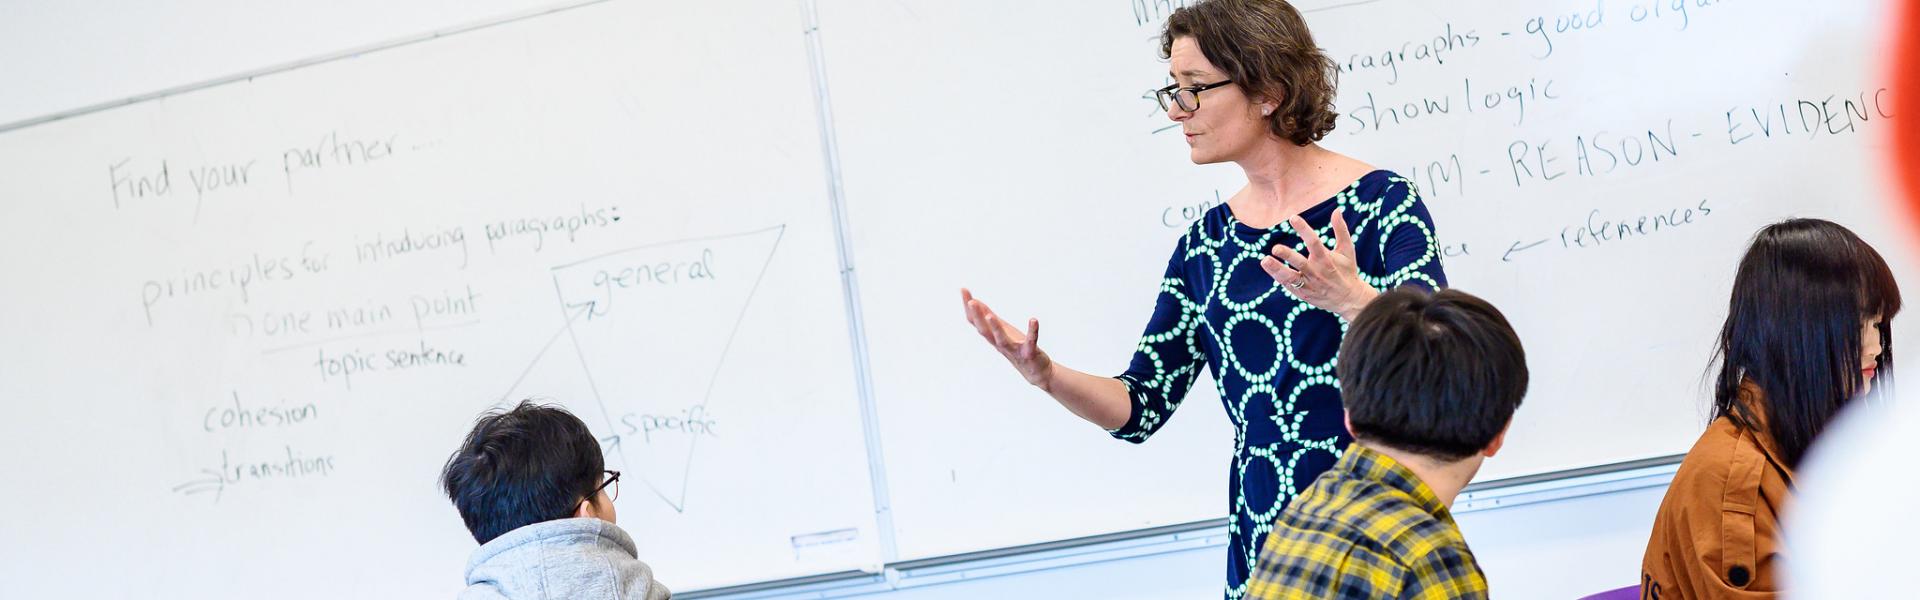 Dr. Joanne Fox teaches a class at Orchard Commons (Photo: Paul Joseph/UBC Brand & Marketing)